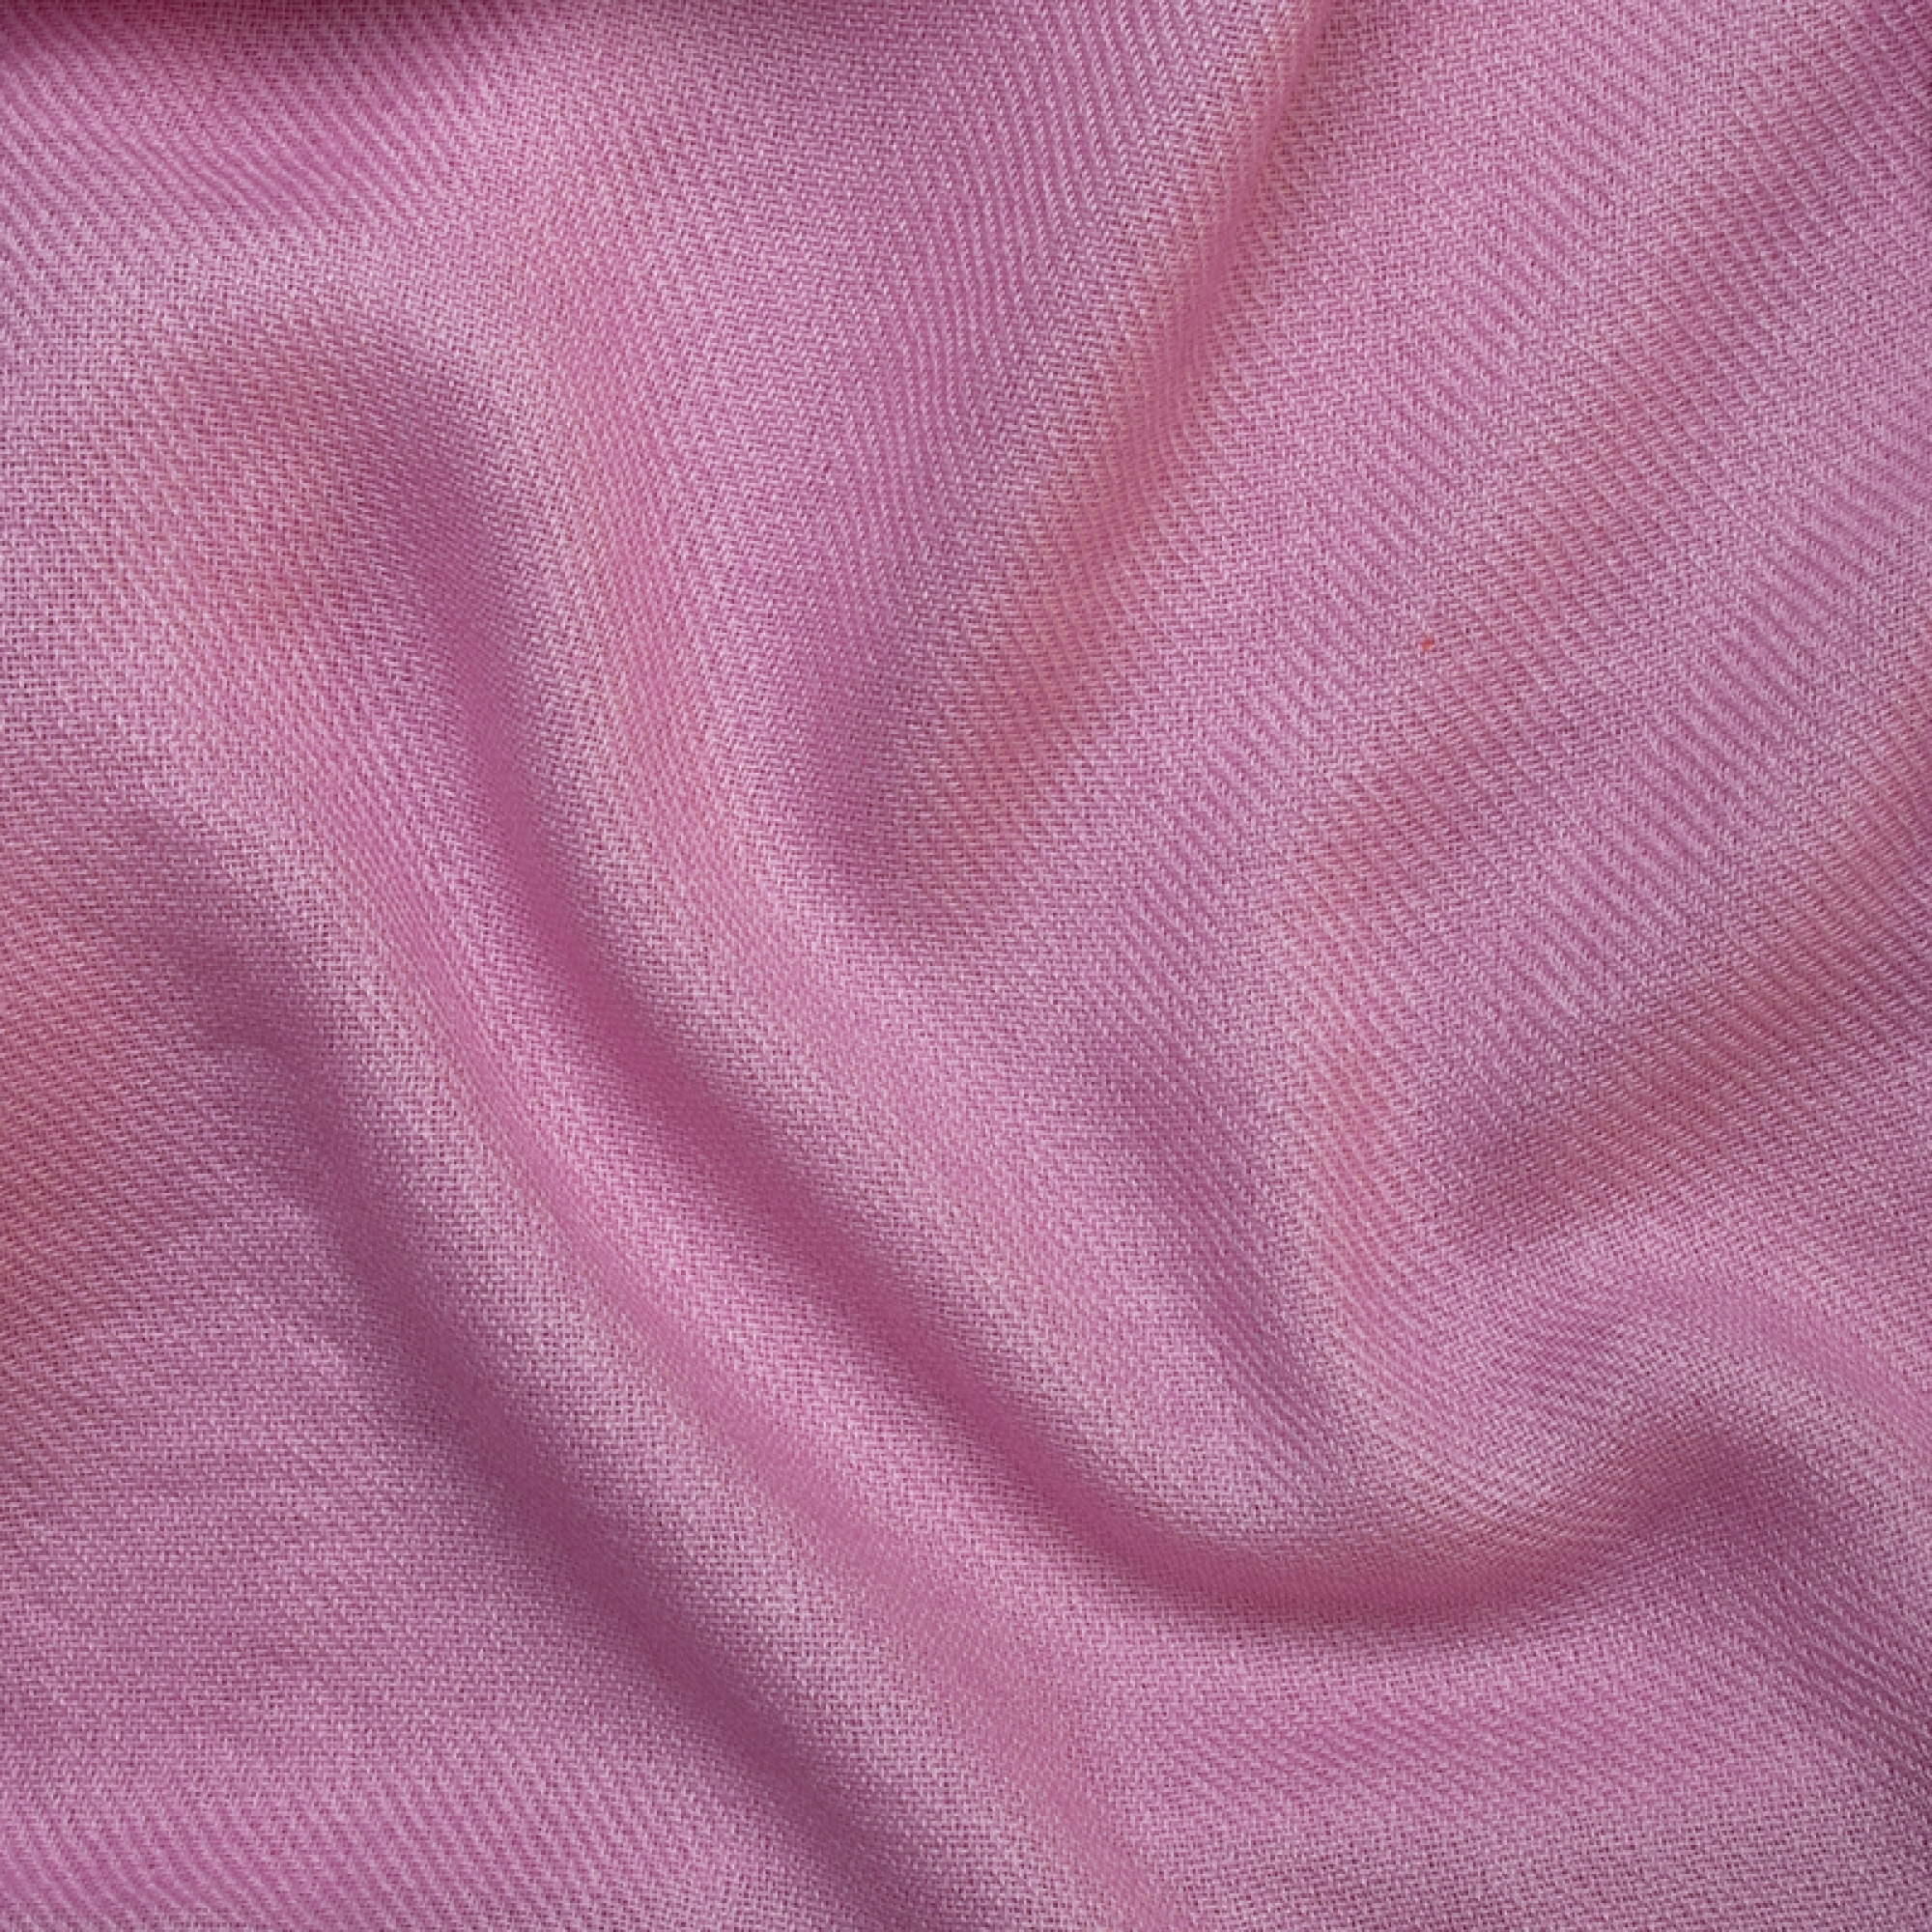 Cashmere accessories exclusive toodoo plain l 220 x 220 pink lavender 220x220cm